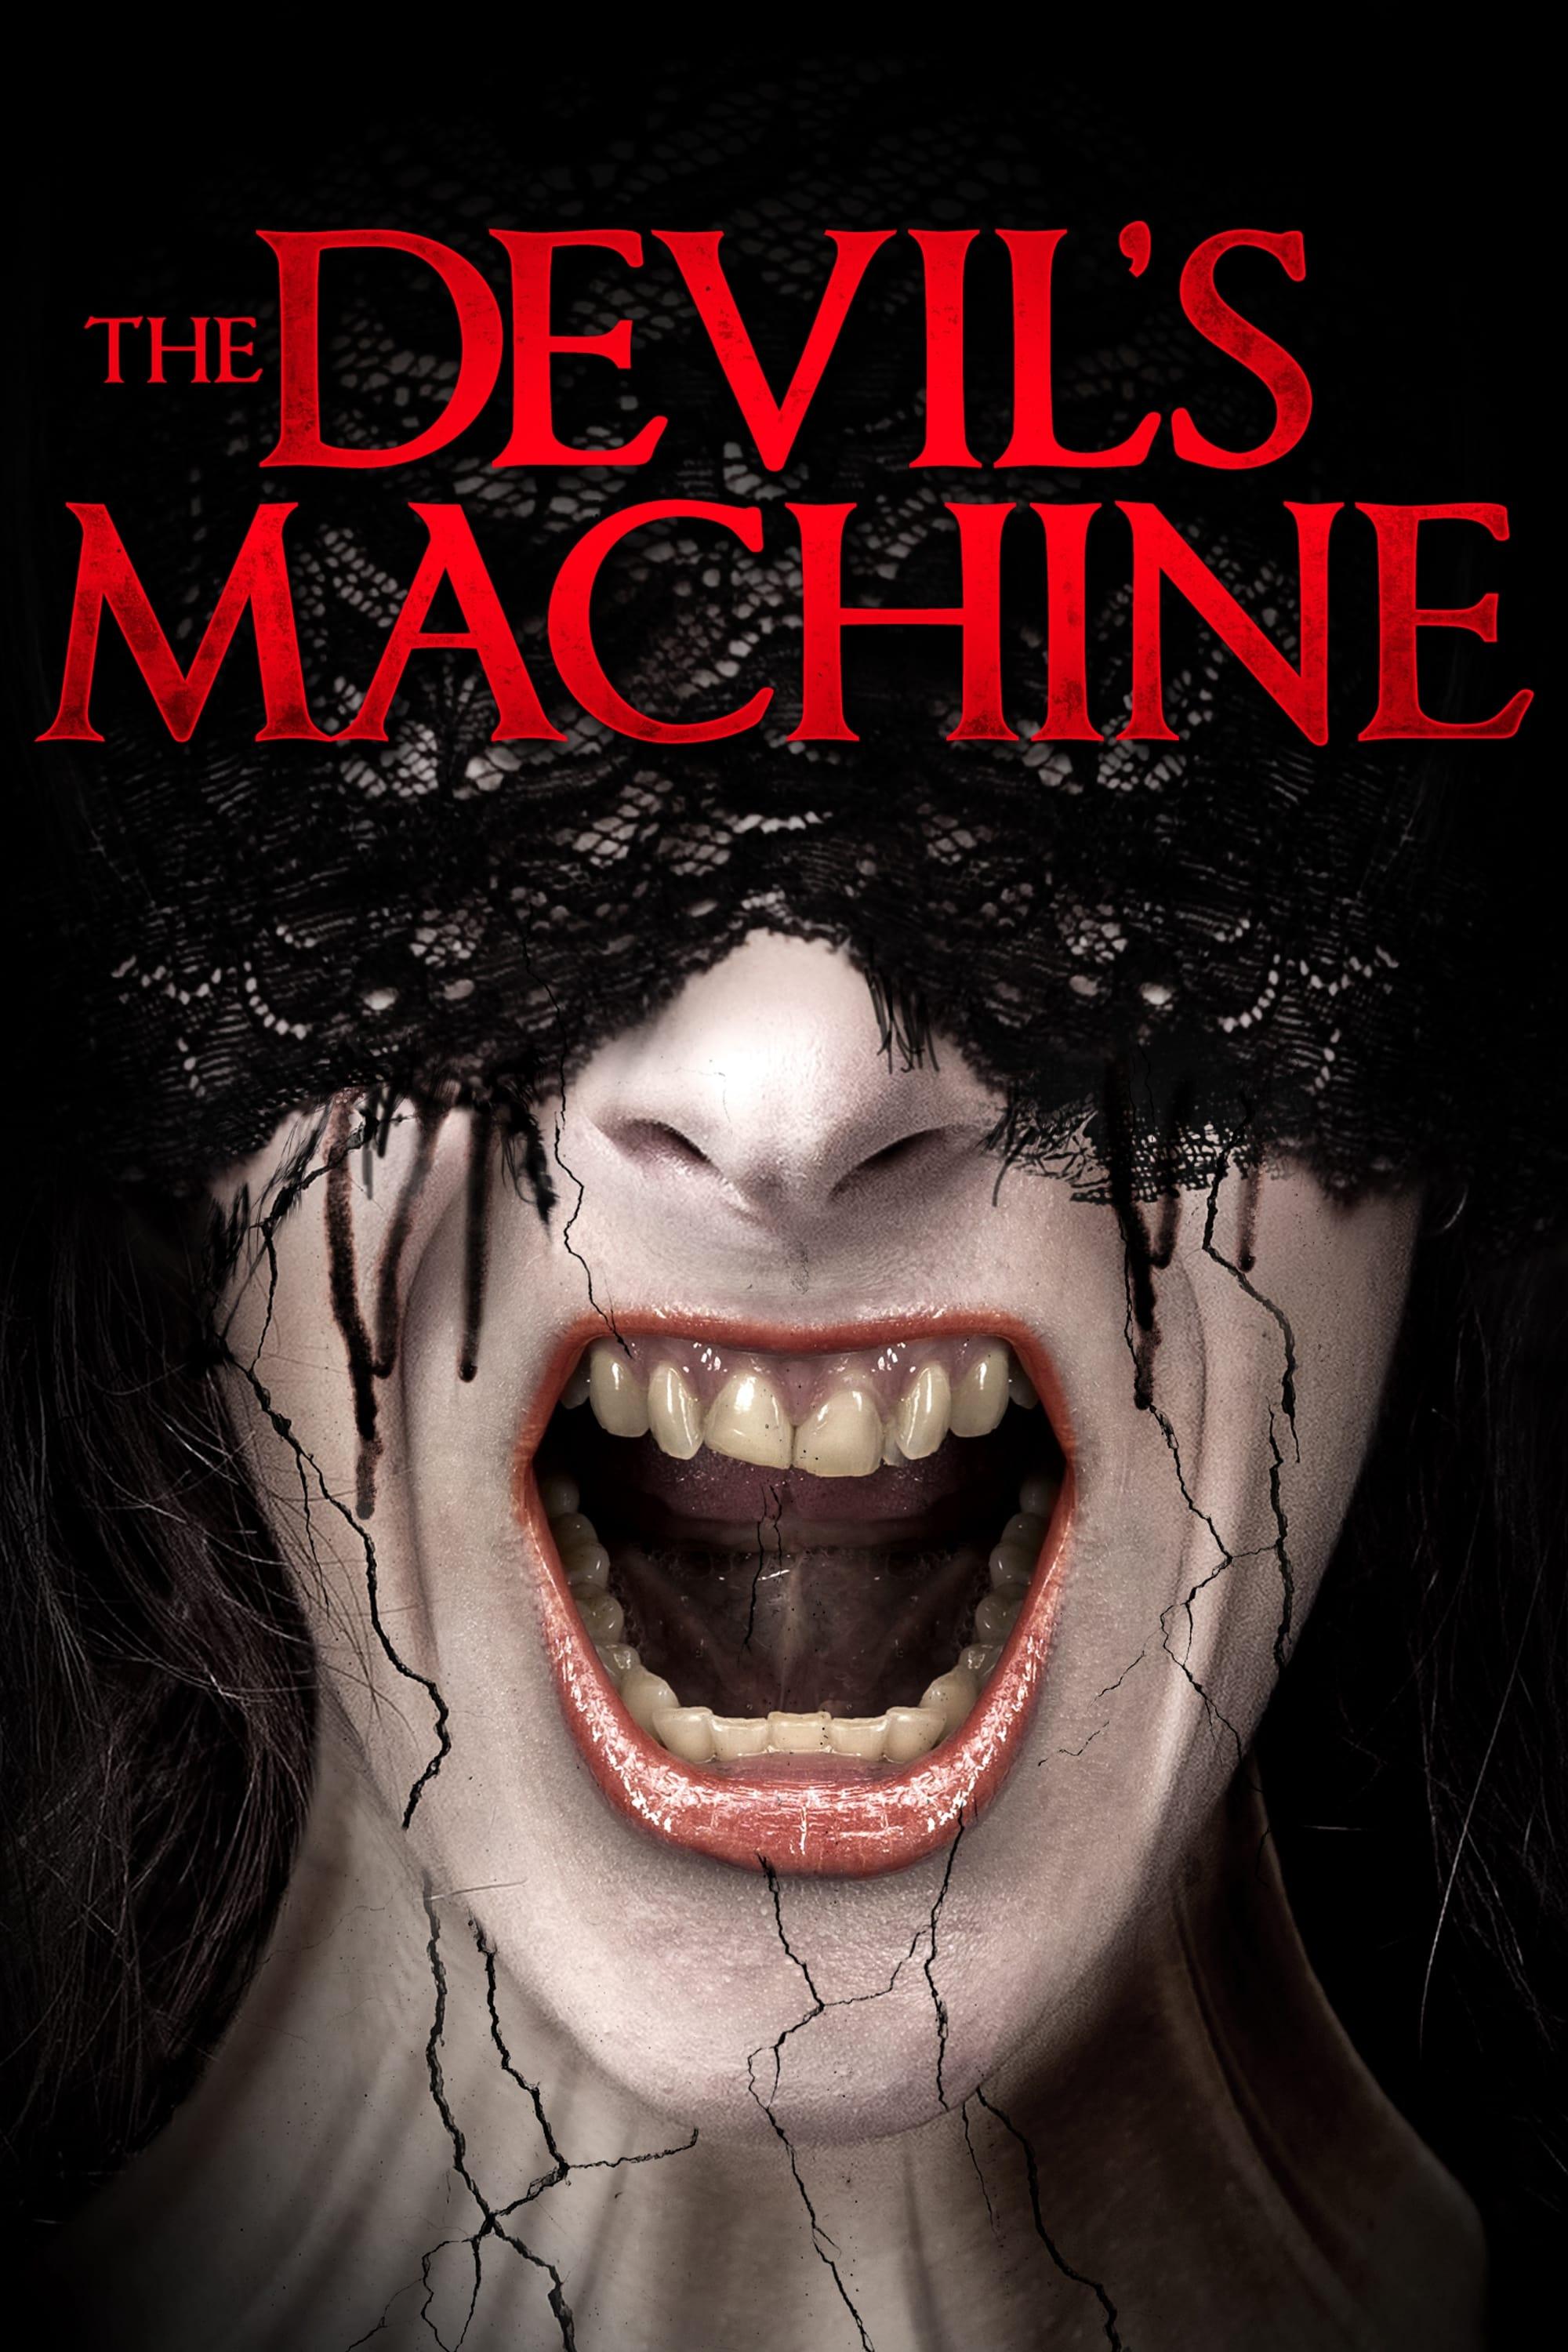 The Devil's Machine poster